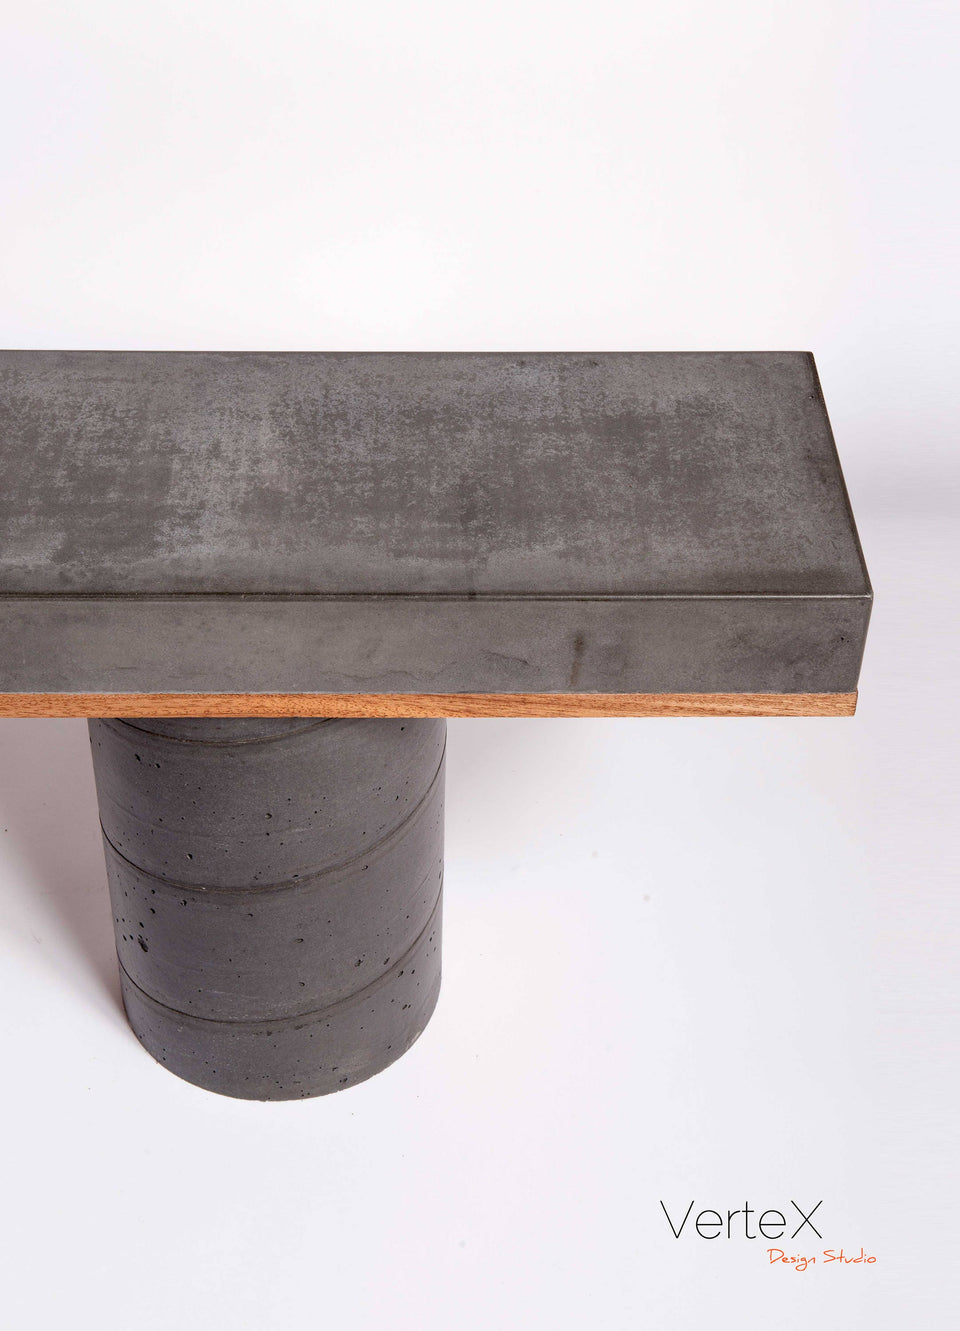 Concrete Kitsugi Bench - Narrow 72"